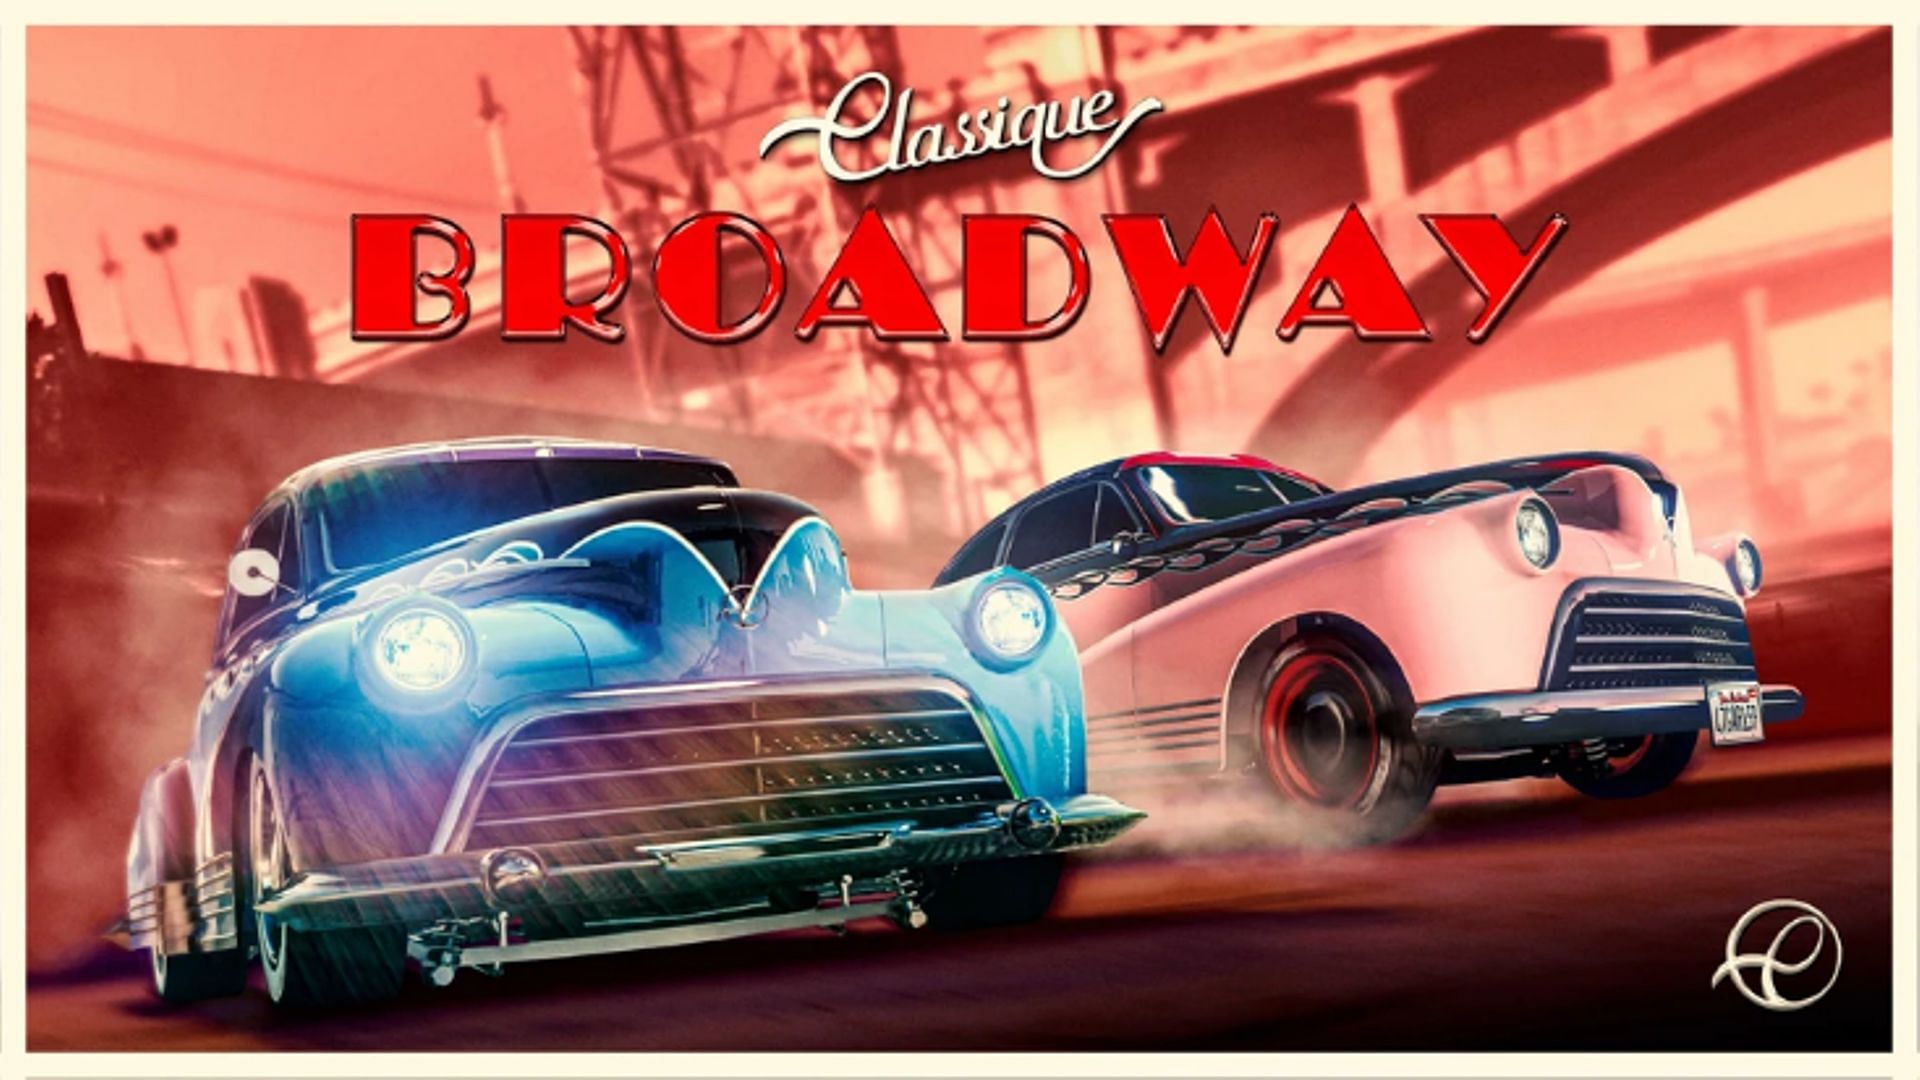 Classique Broadway (Image via Rockstar Games)